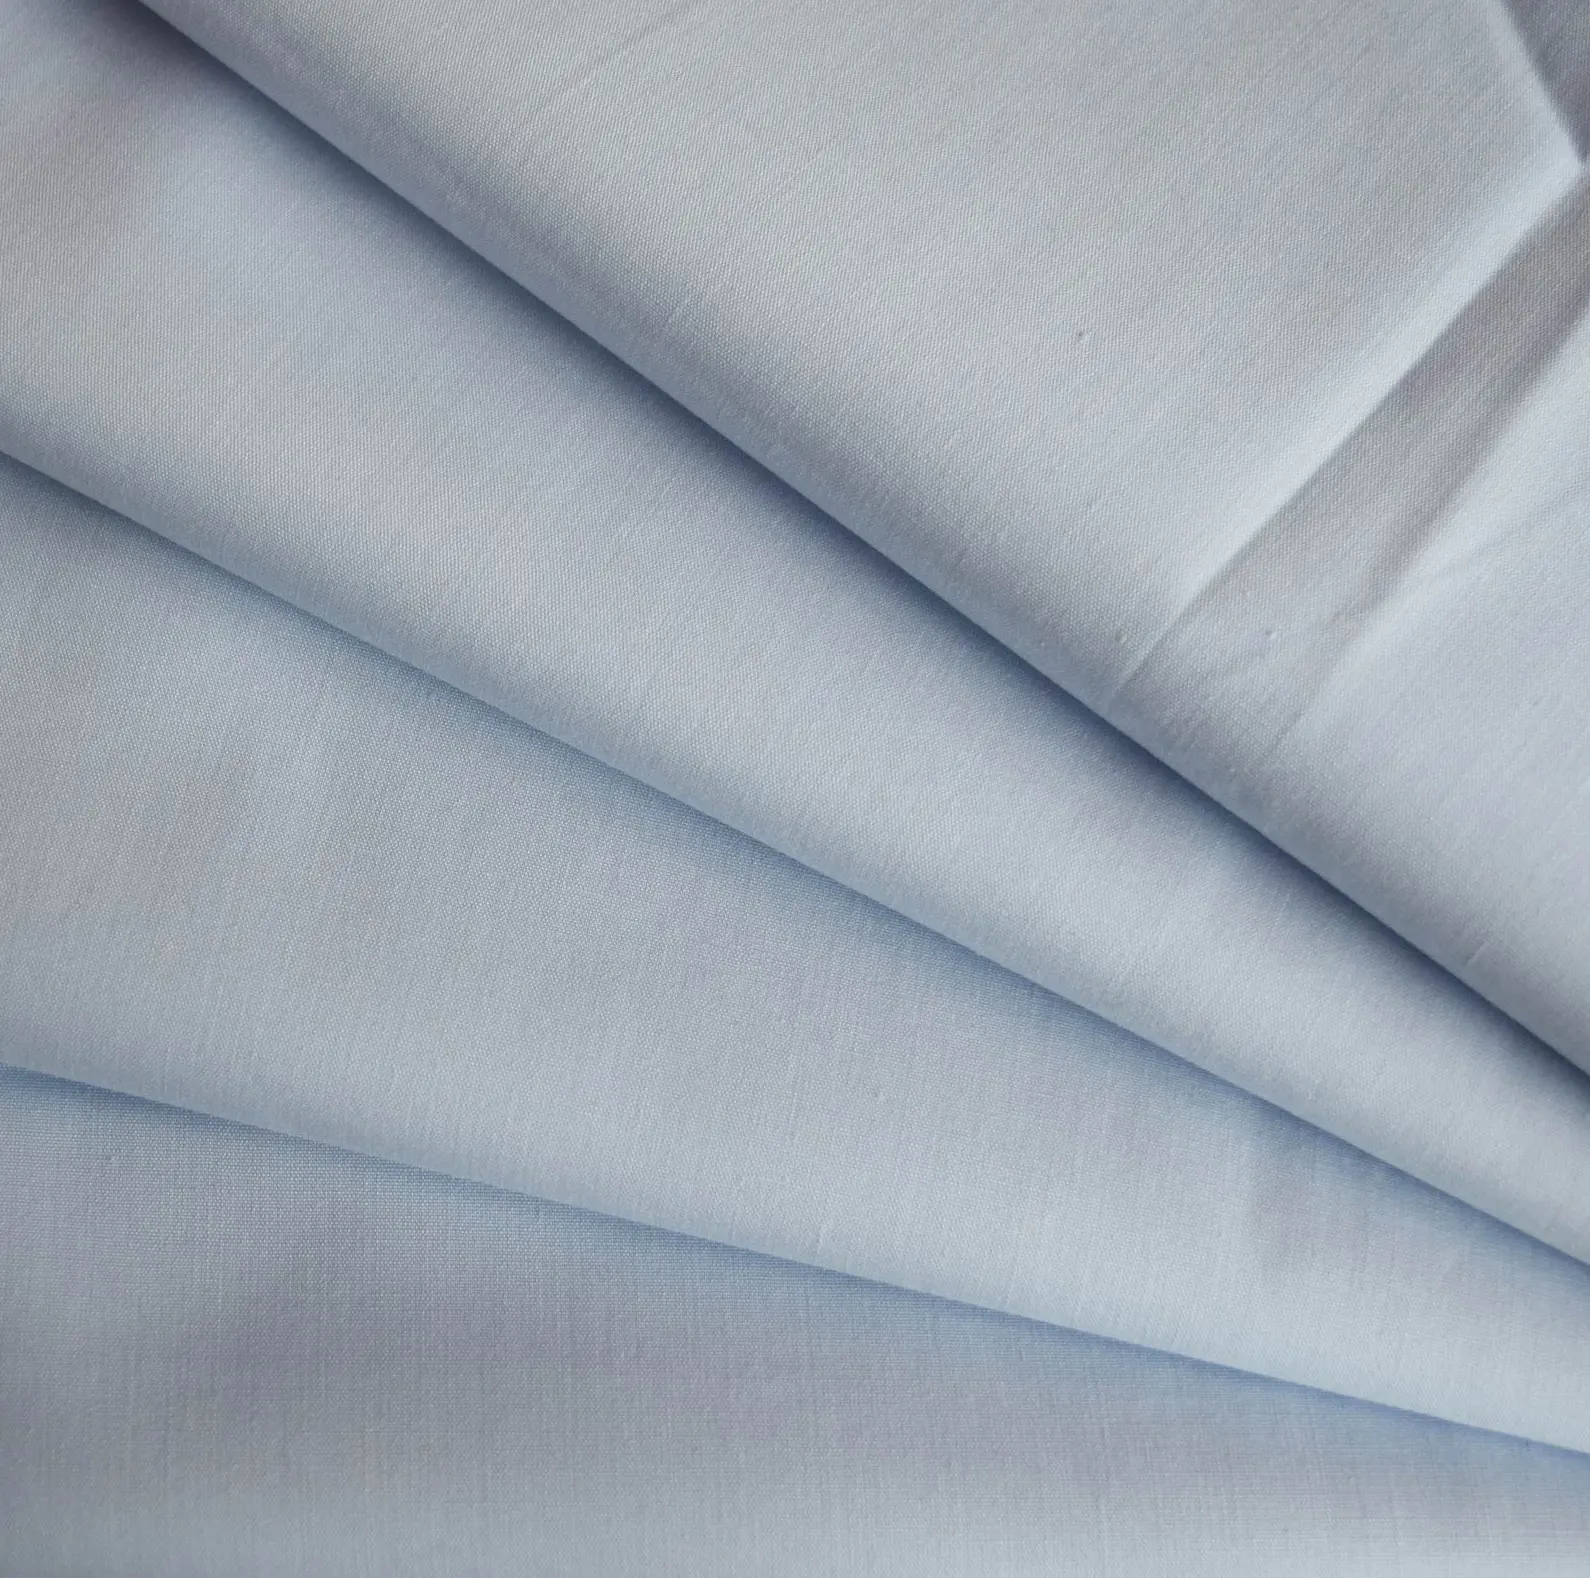 Tc 65/35 Polyester Cotton Gabardine Fabric Twill Gabardine For School Uniform or Pants